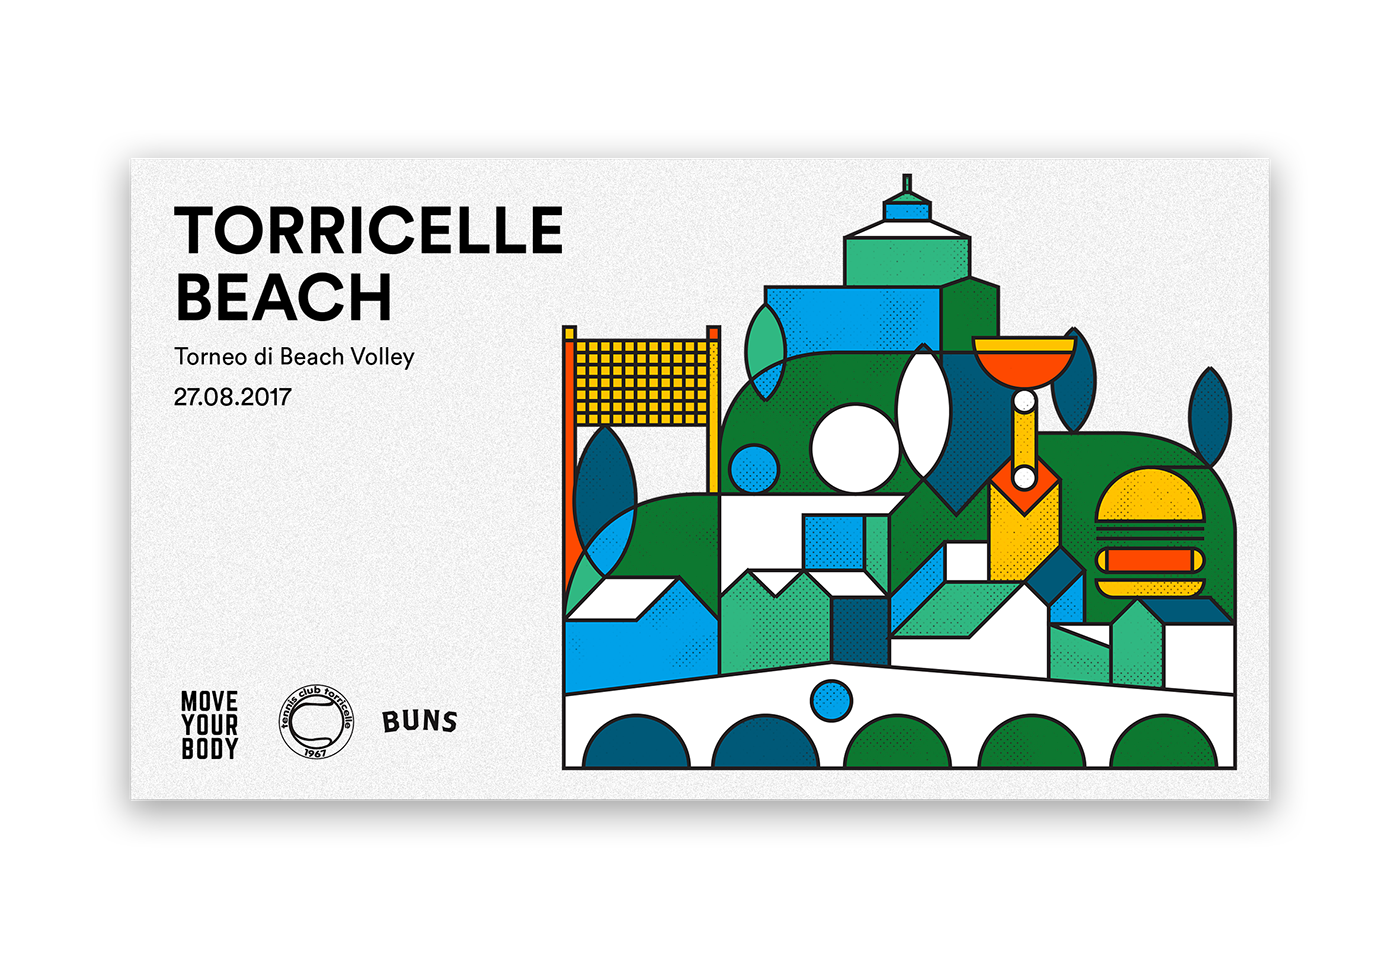 verona Torricelle beachvolley buns efferossini federico rossini beach ILLUSTRATION 